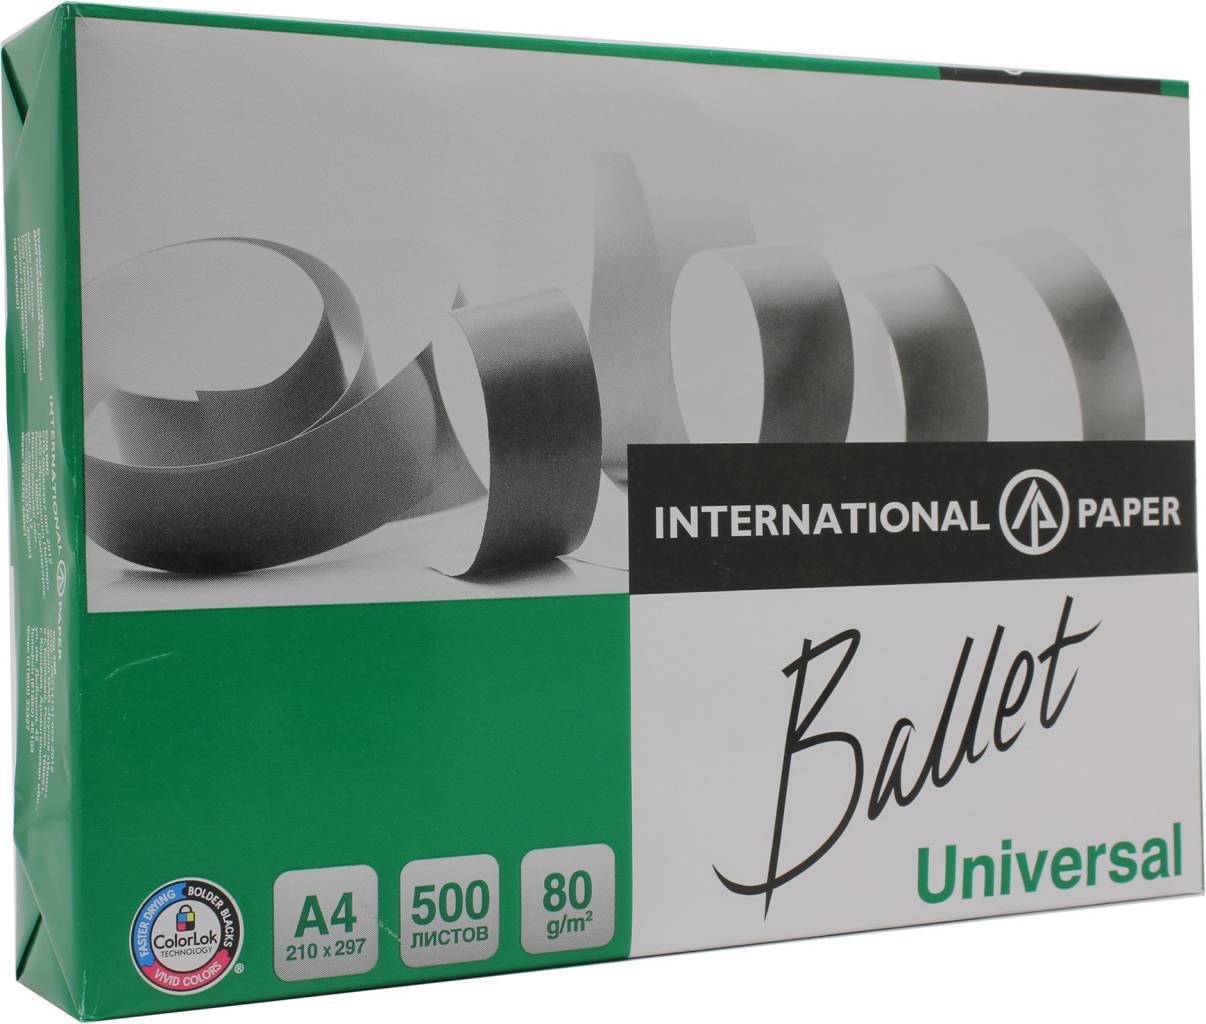    4 Ballet Universal (500 , 80 /2) 